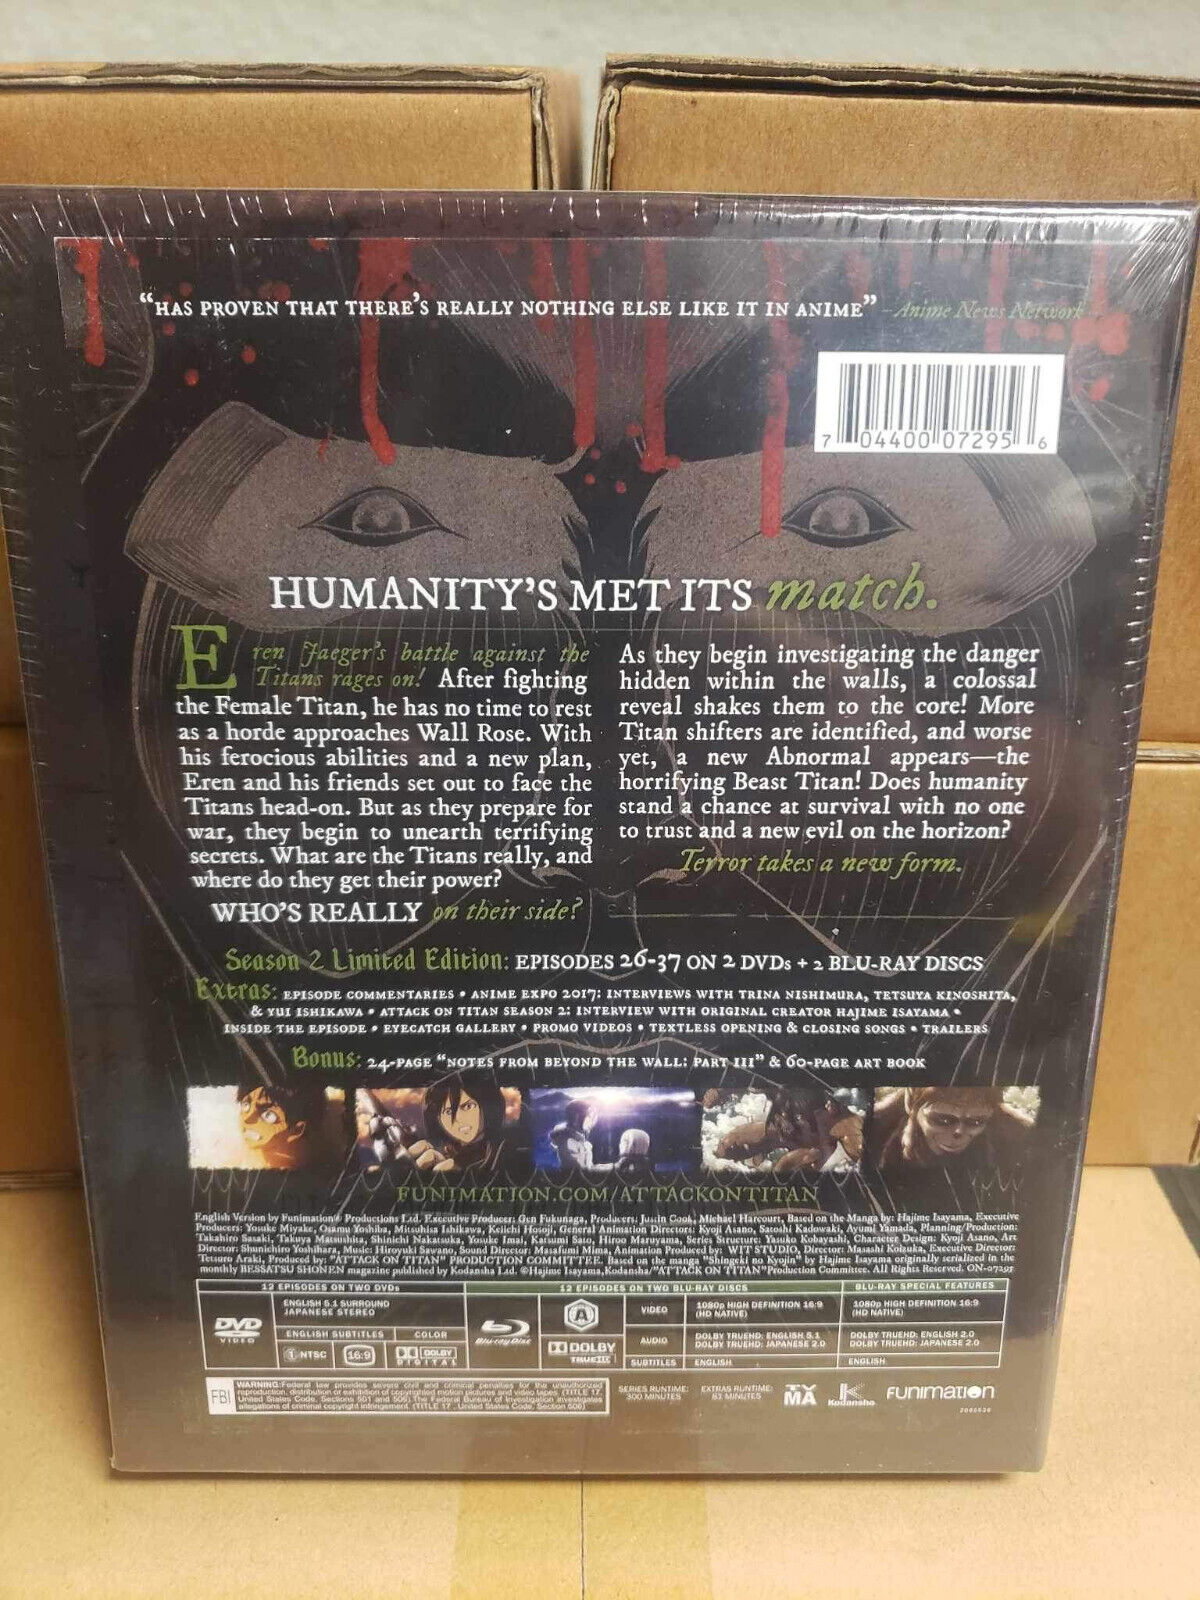 Attack On Titan: Season 2 - Limited Edition Blu-Ray + DVD Box Set * New